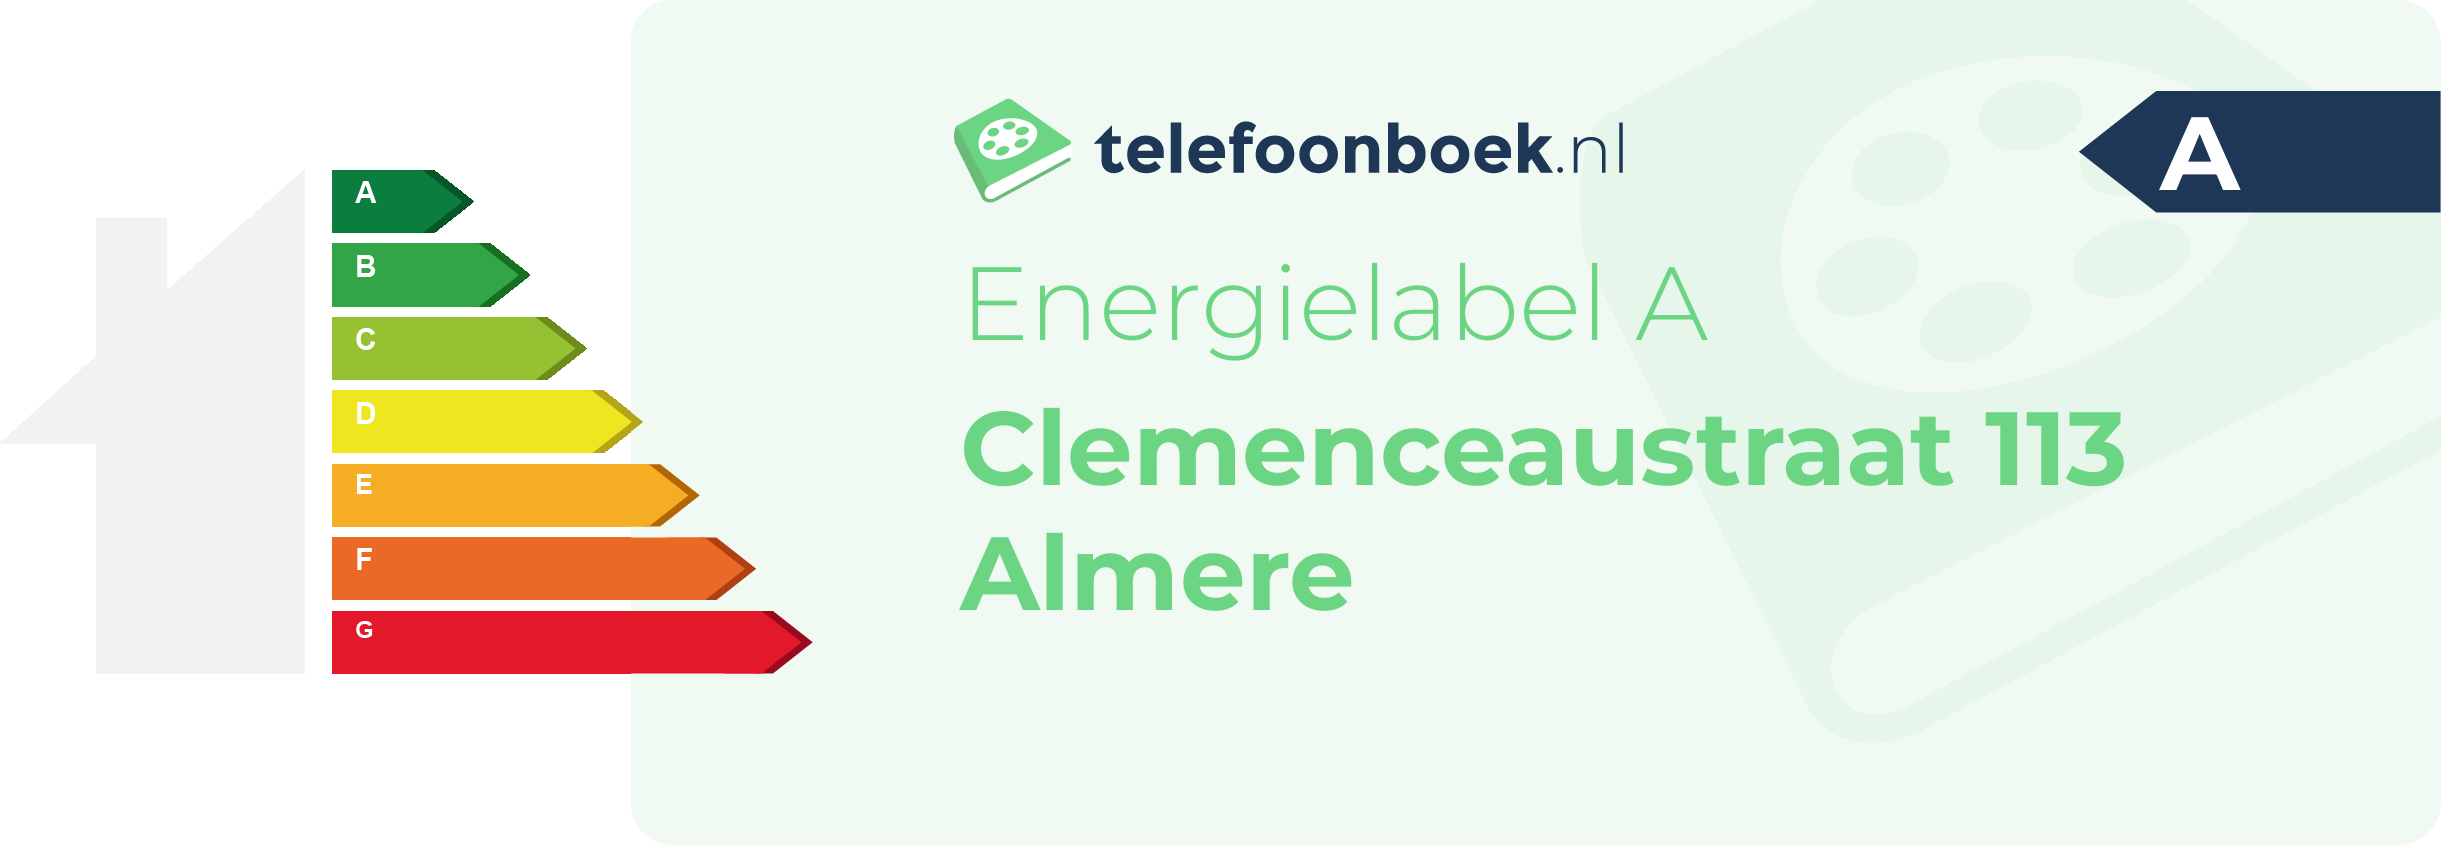 Energielabel Clemenceaustraat 113 Almere